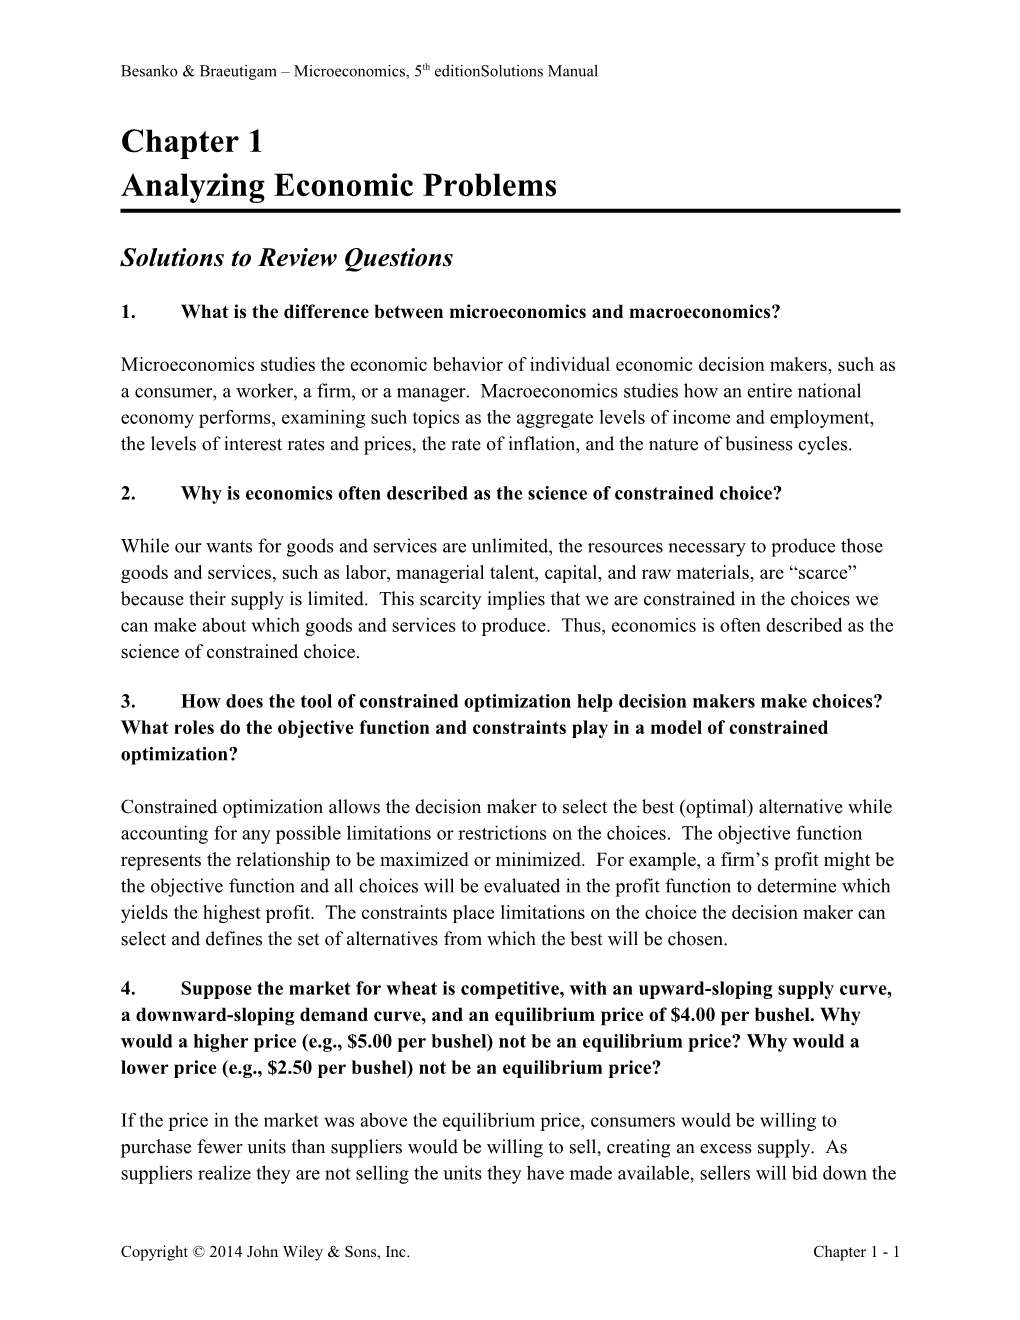 Besanko & Braeutigam Microeconomics, 5Theditionsolutions Manual